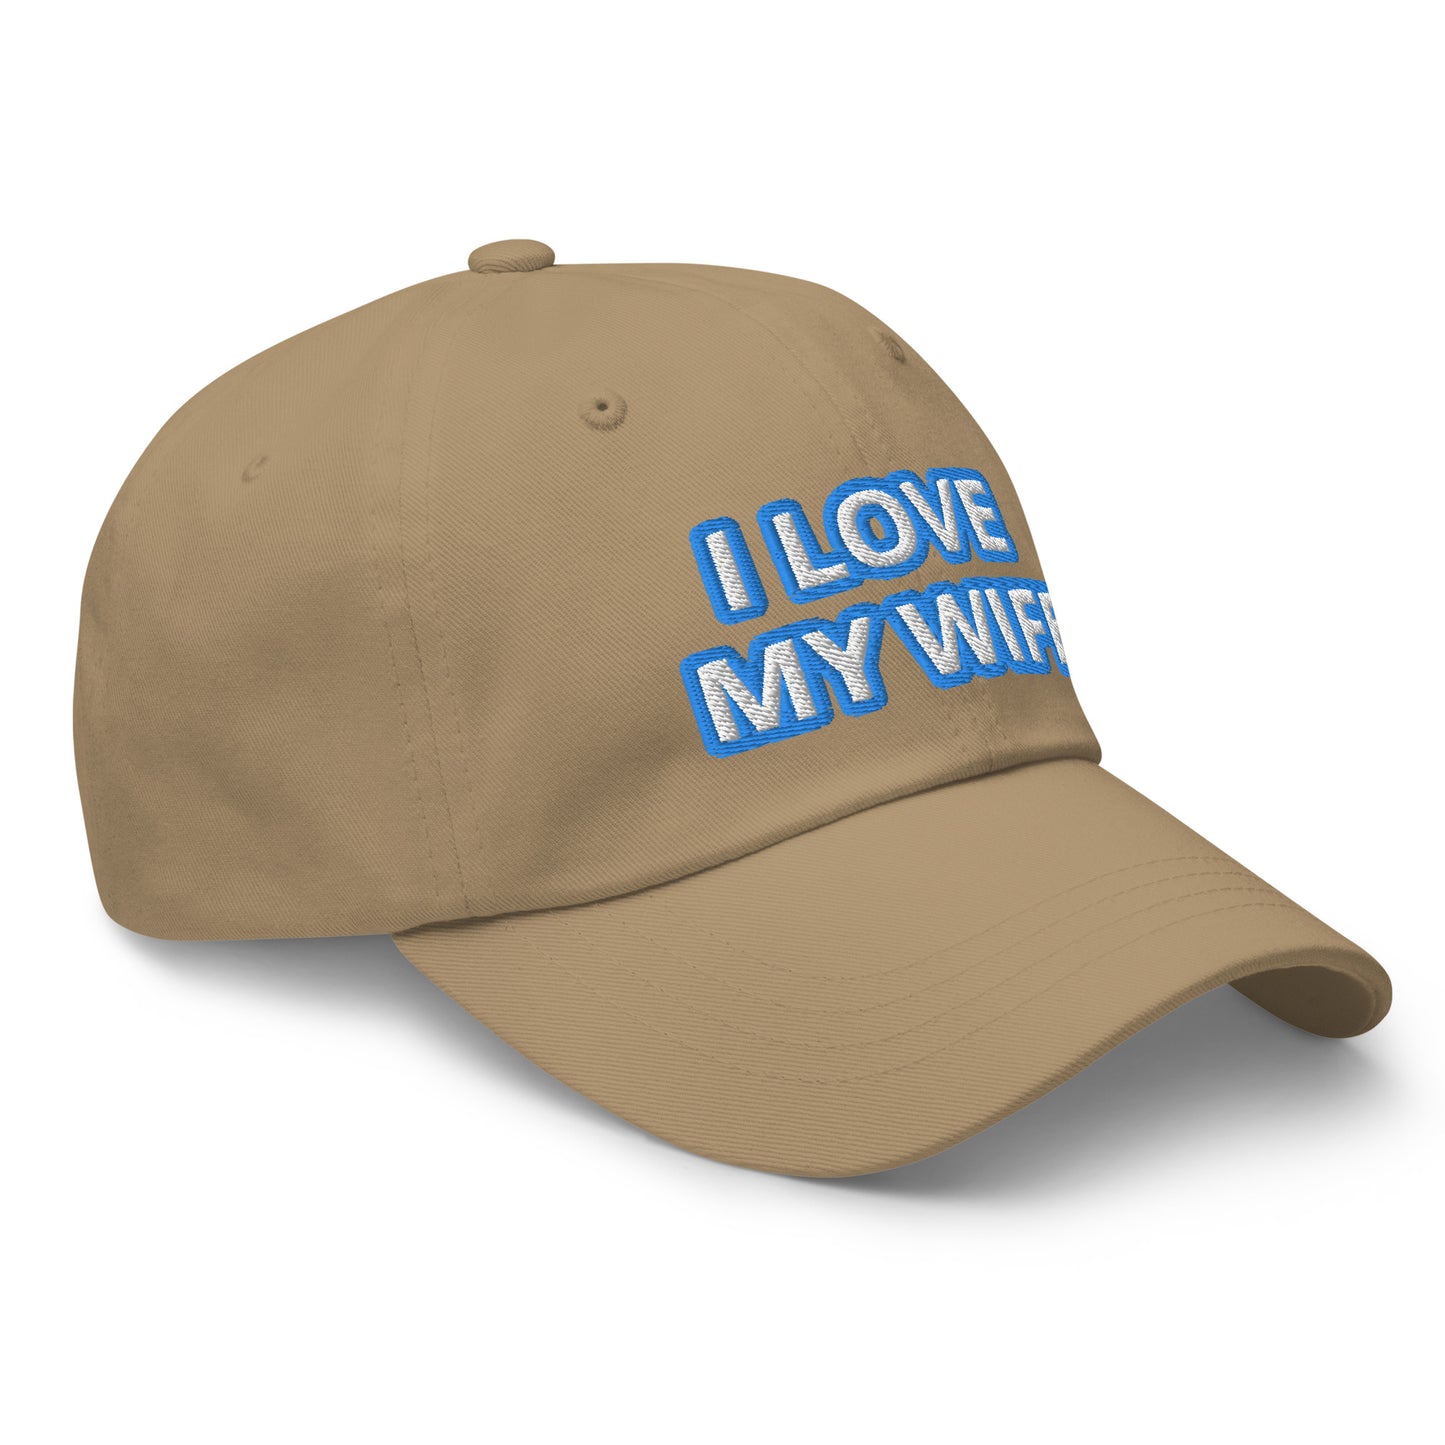 I LOVE MY WIFE classic hat